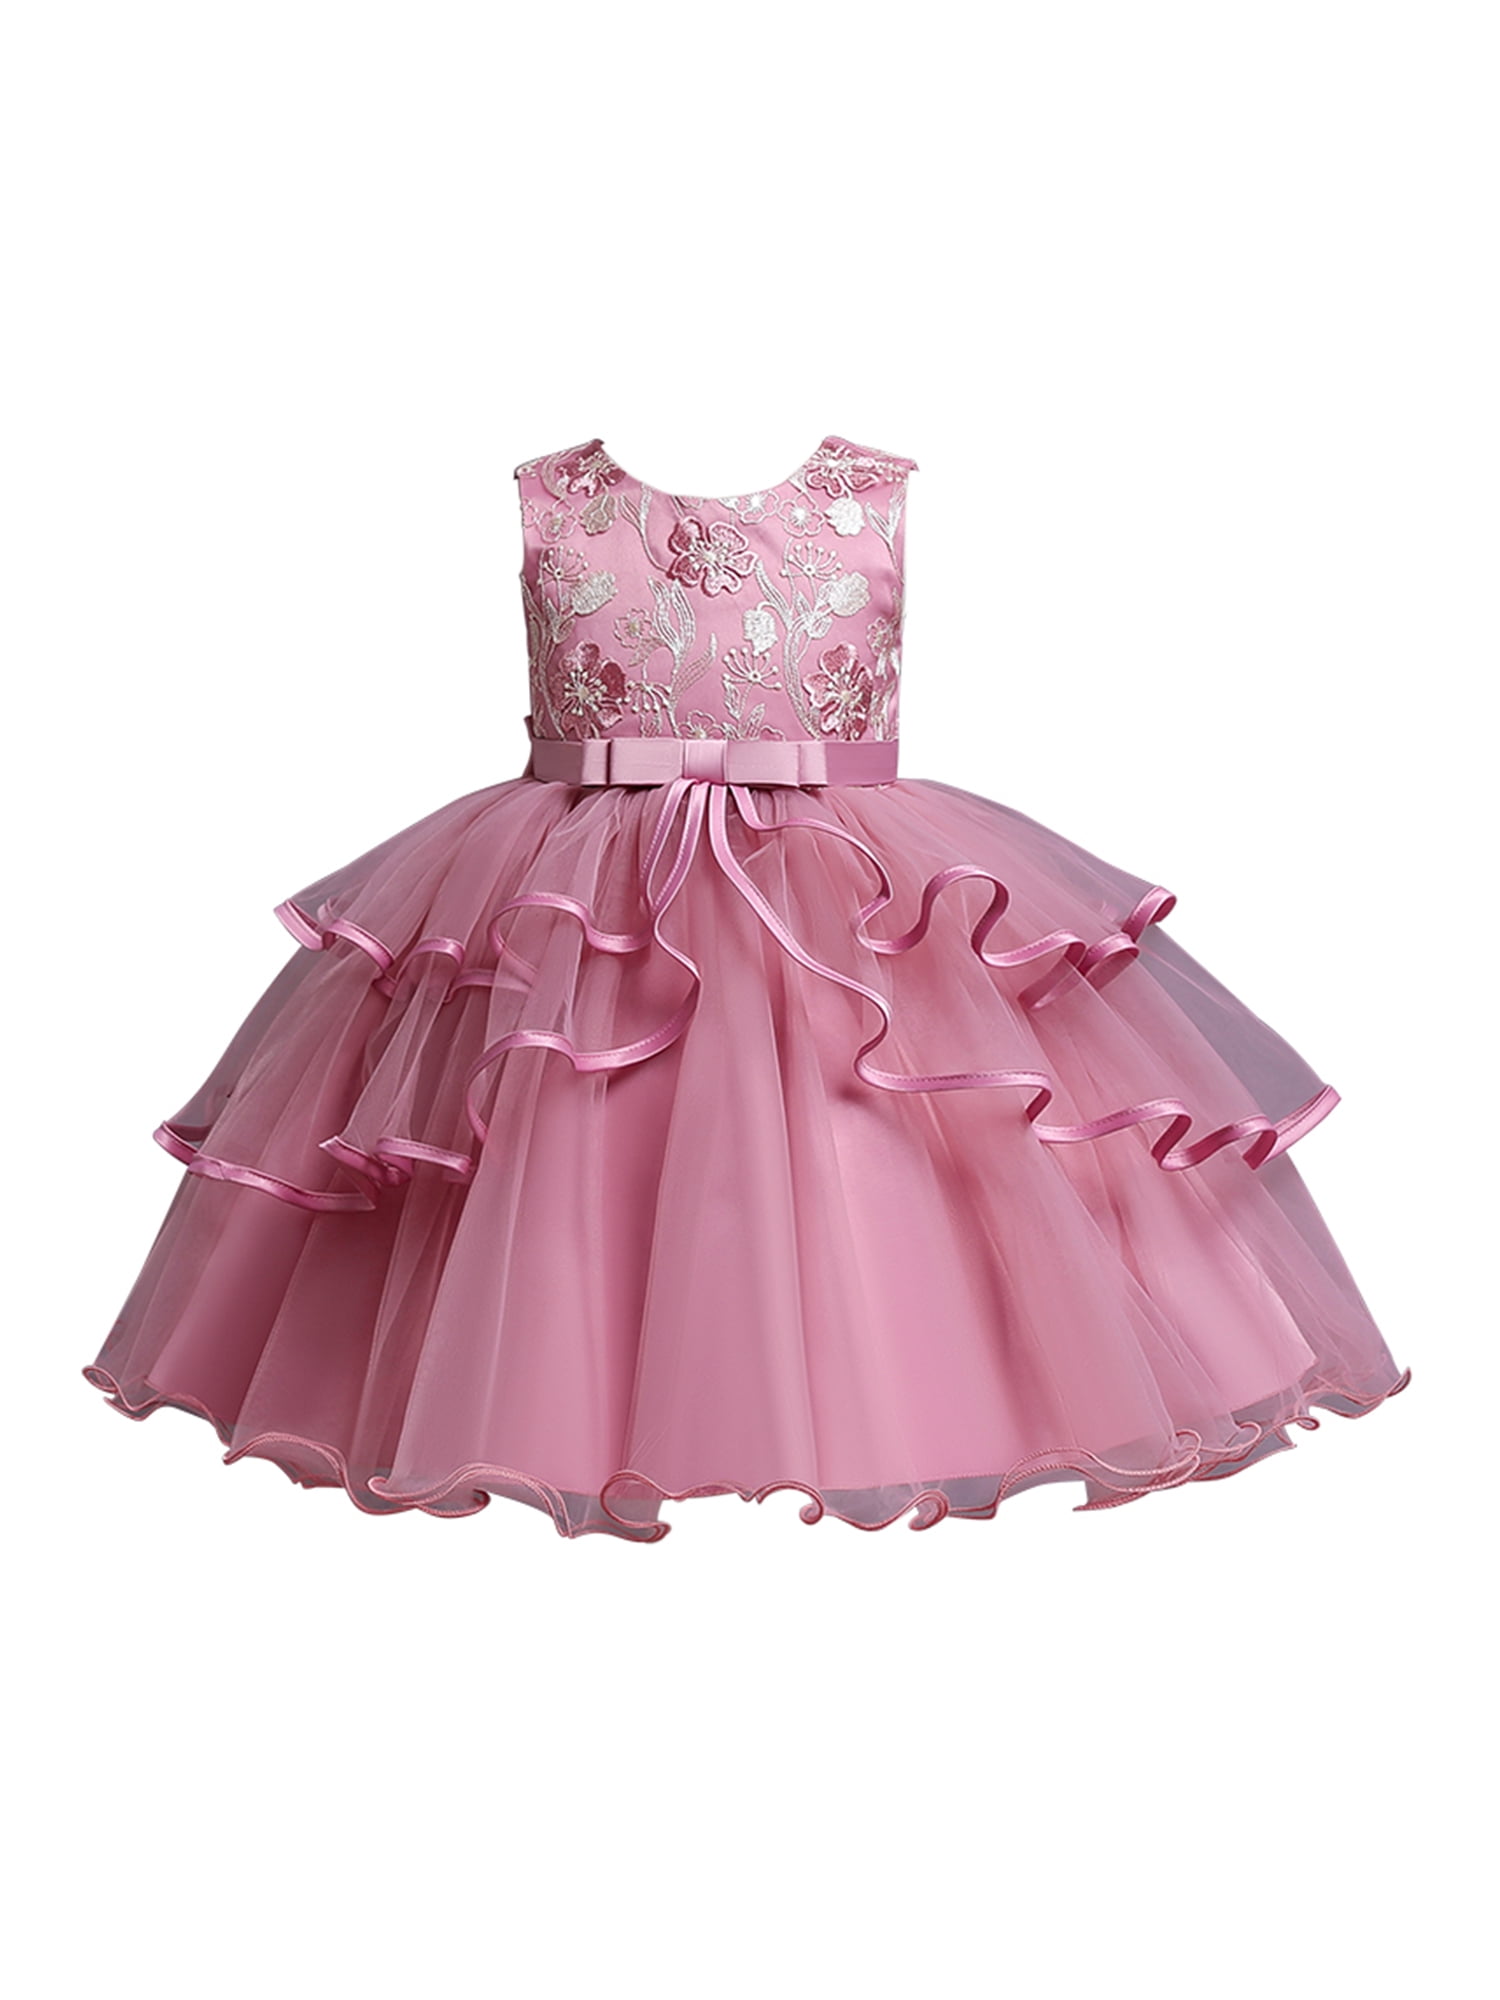 Kids Flower Girls Sequin Tutu Dress Princess Wedding Party Short Dress Age 1-6 Y 